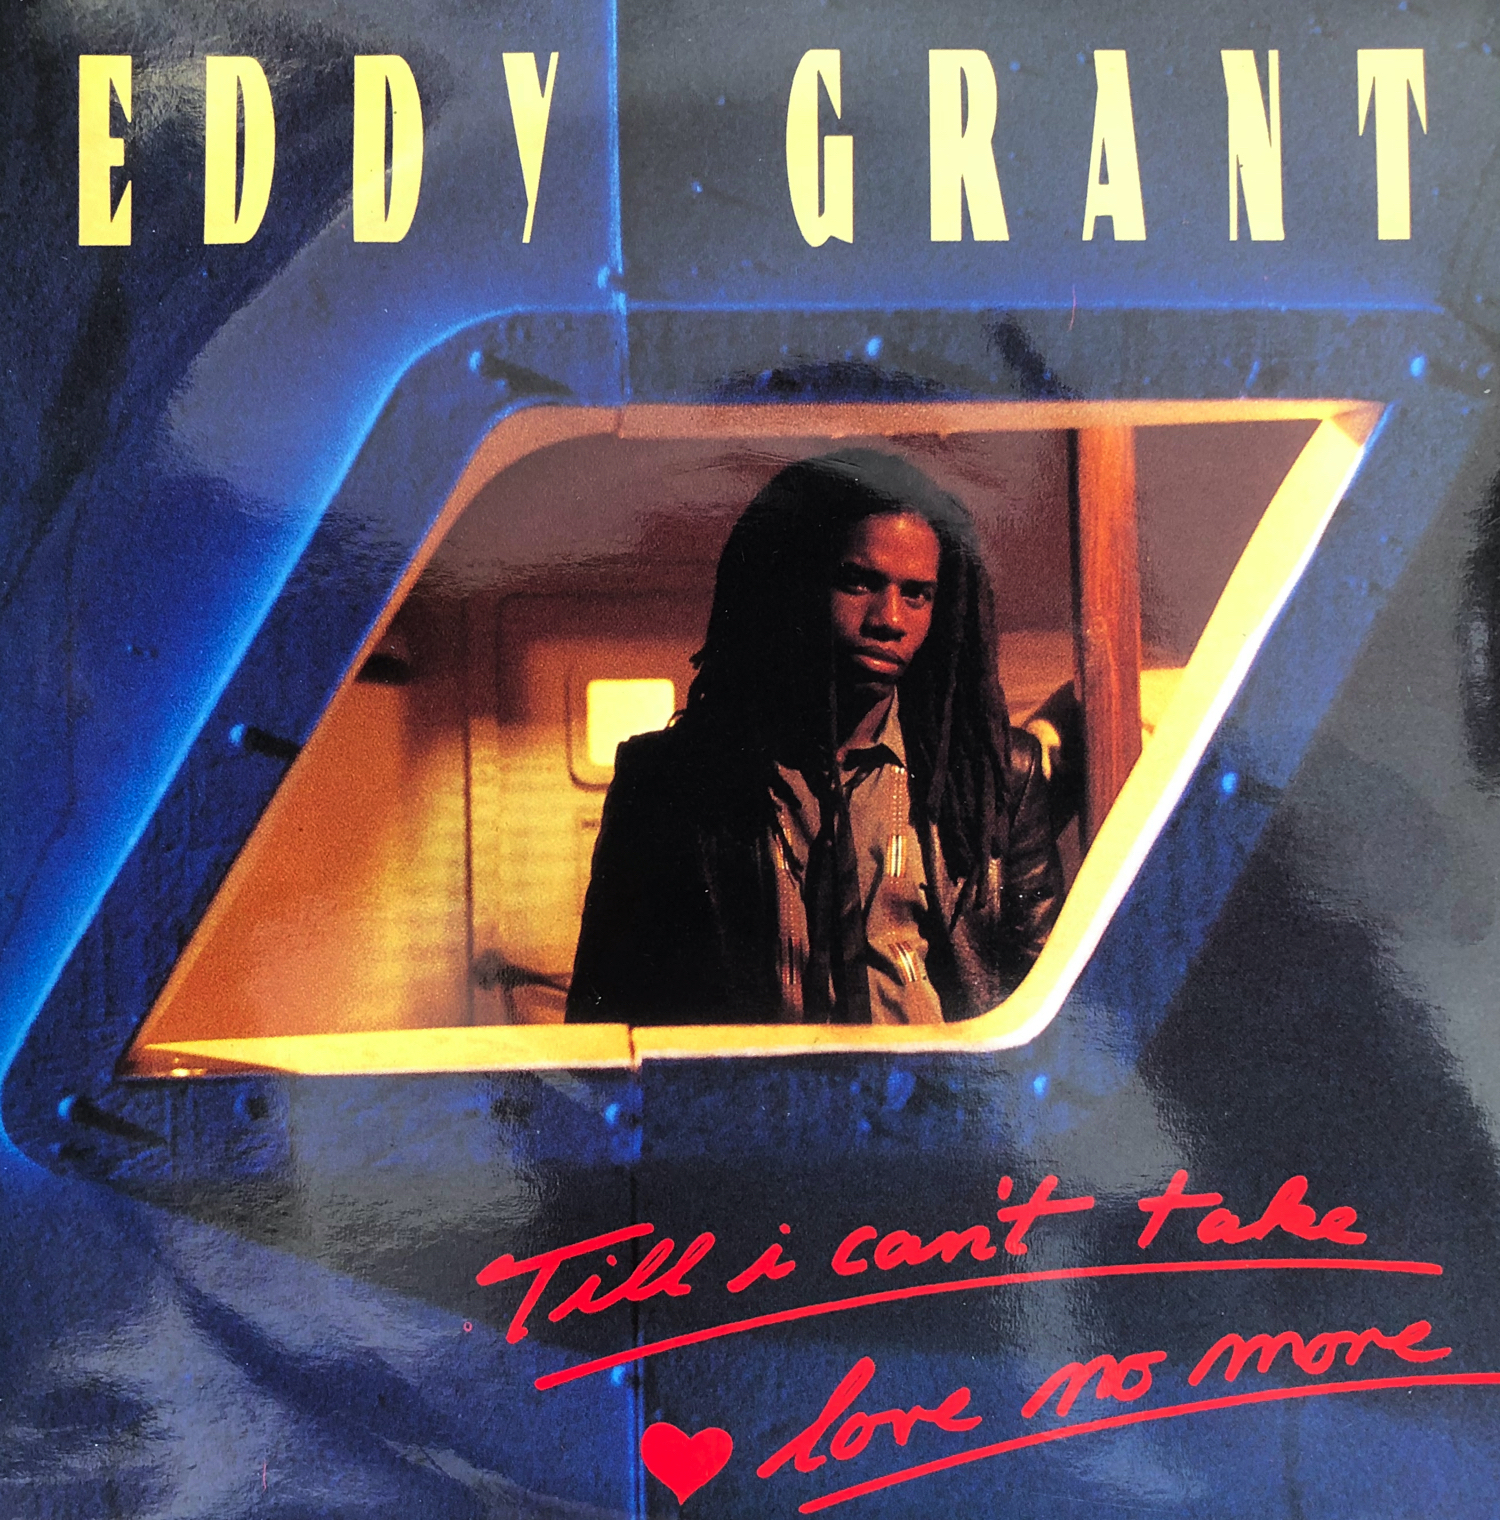 Eddy Grant 7 Inch Vinyl Record Picture Sleeve